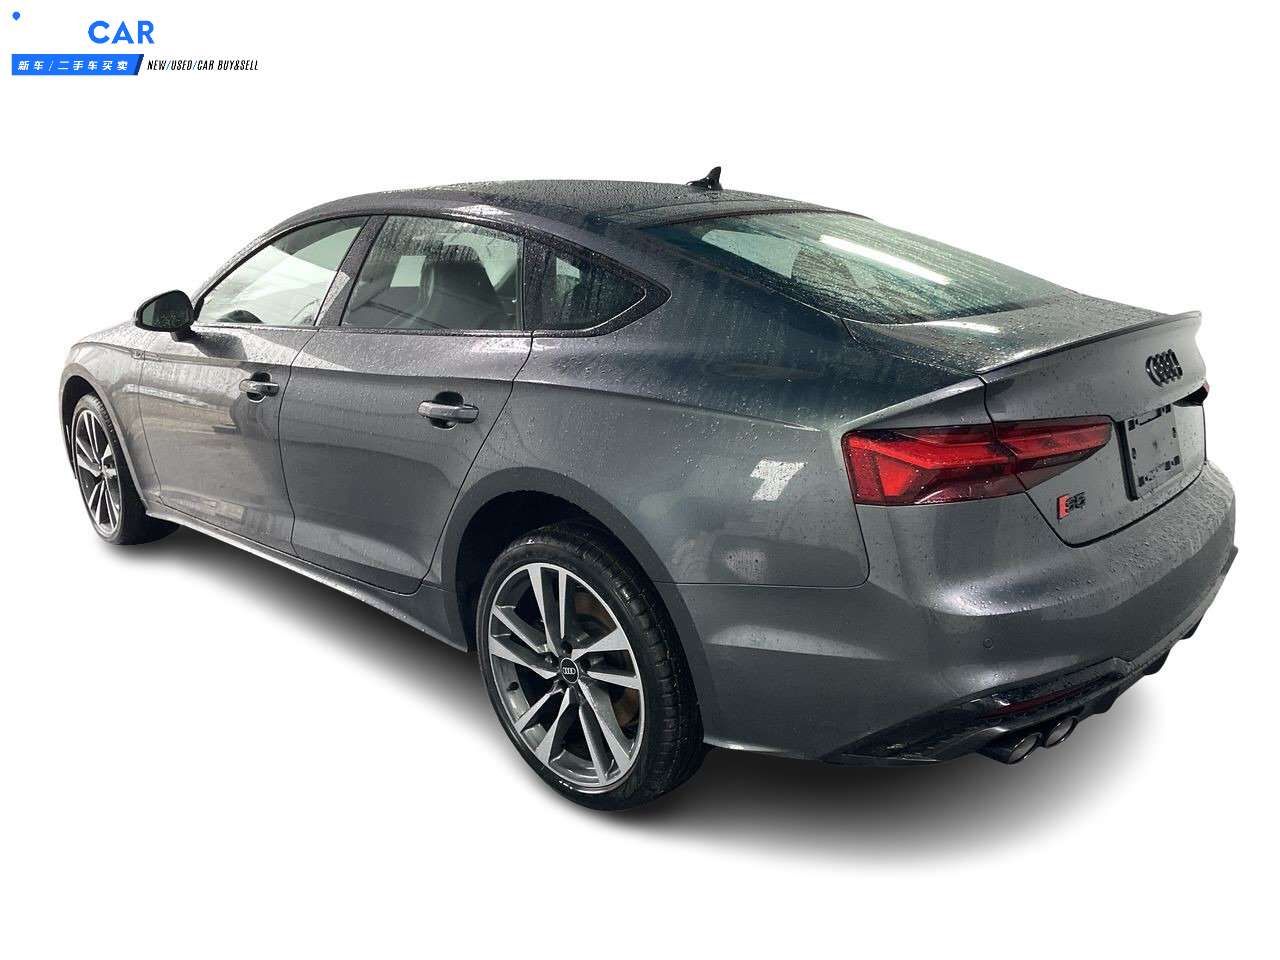 2023 Audi S5 sportback Progressiv - INFOCAR - Toronto Auto Trading Platform